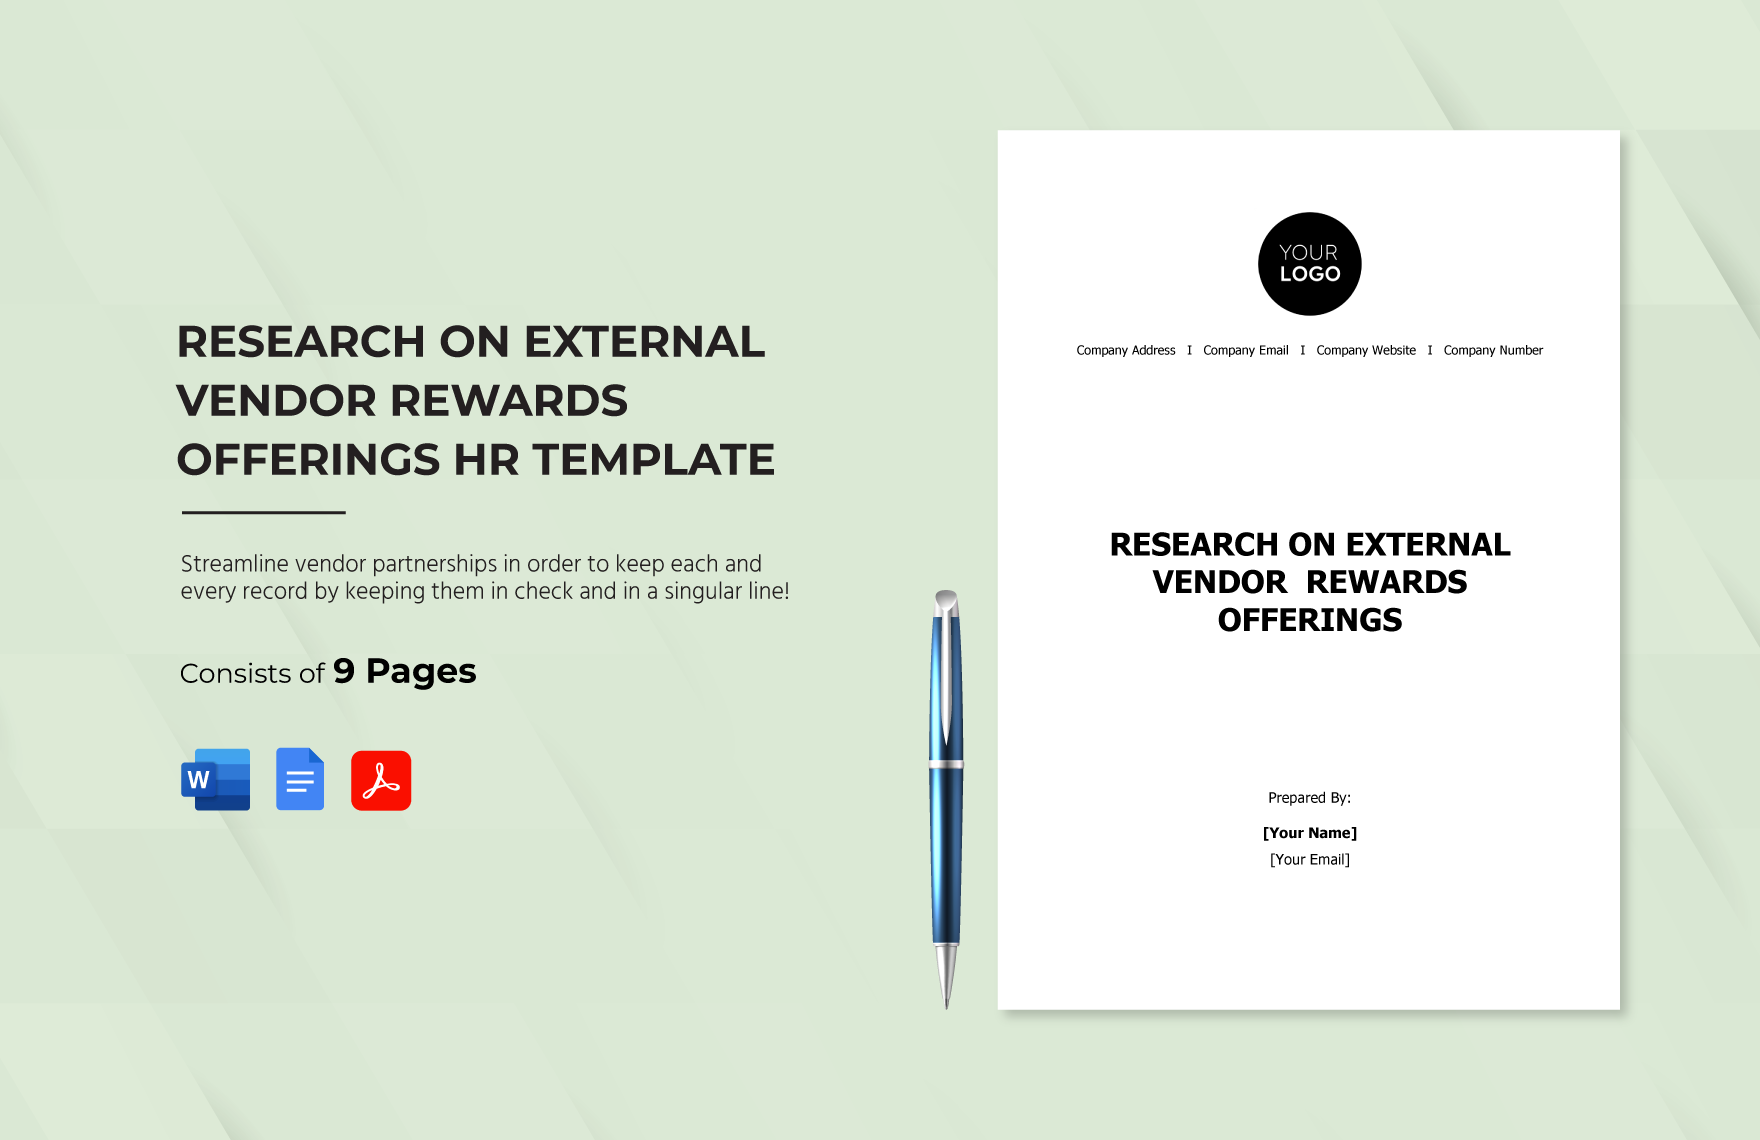 Research on External Vendor Rewards Offerings HR Template